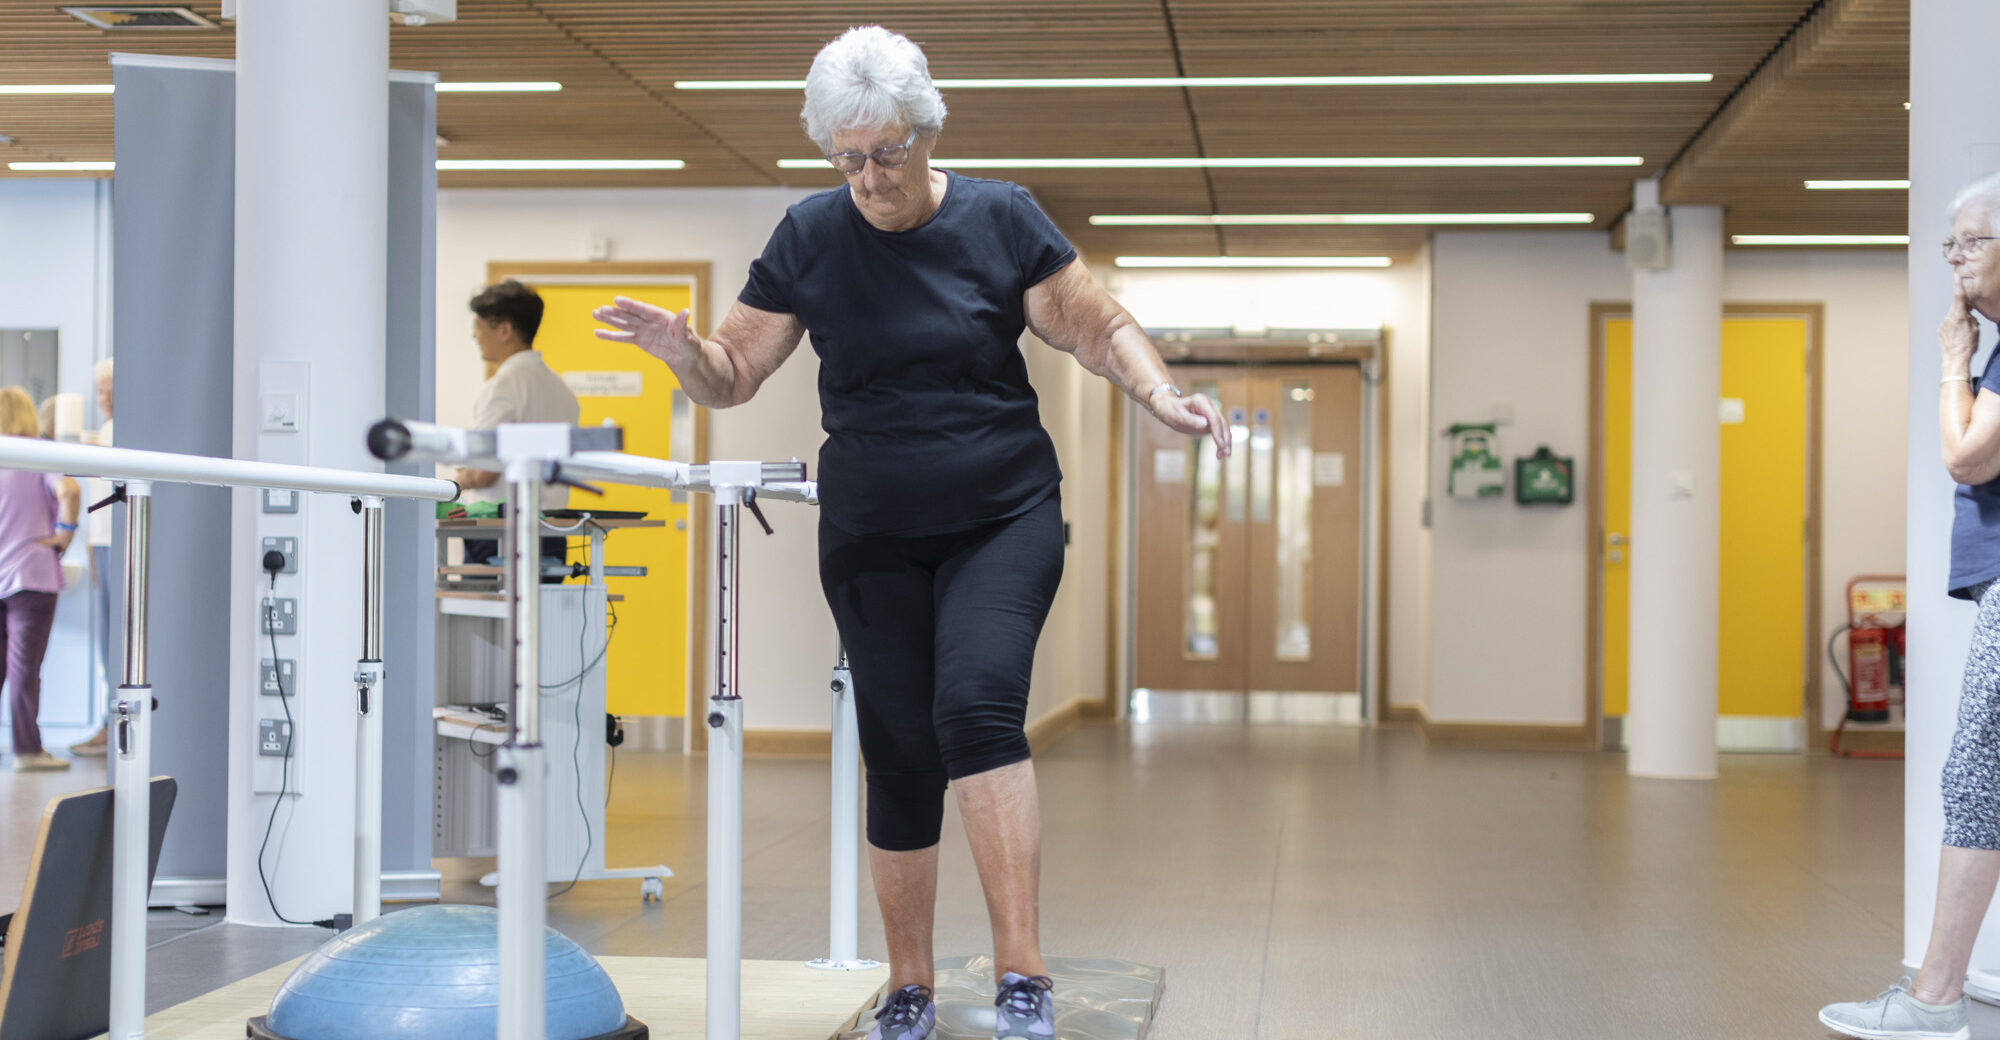 Older adult performing balance exercises in rehabilitation setting